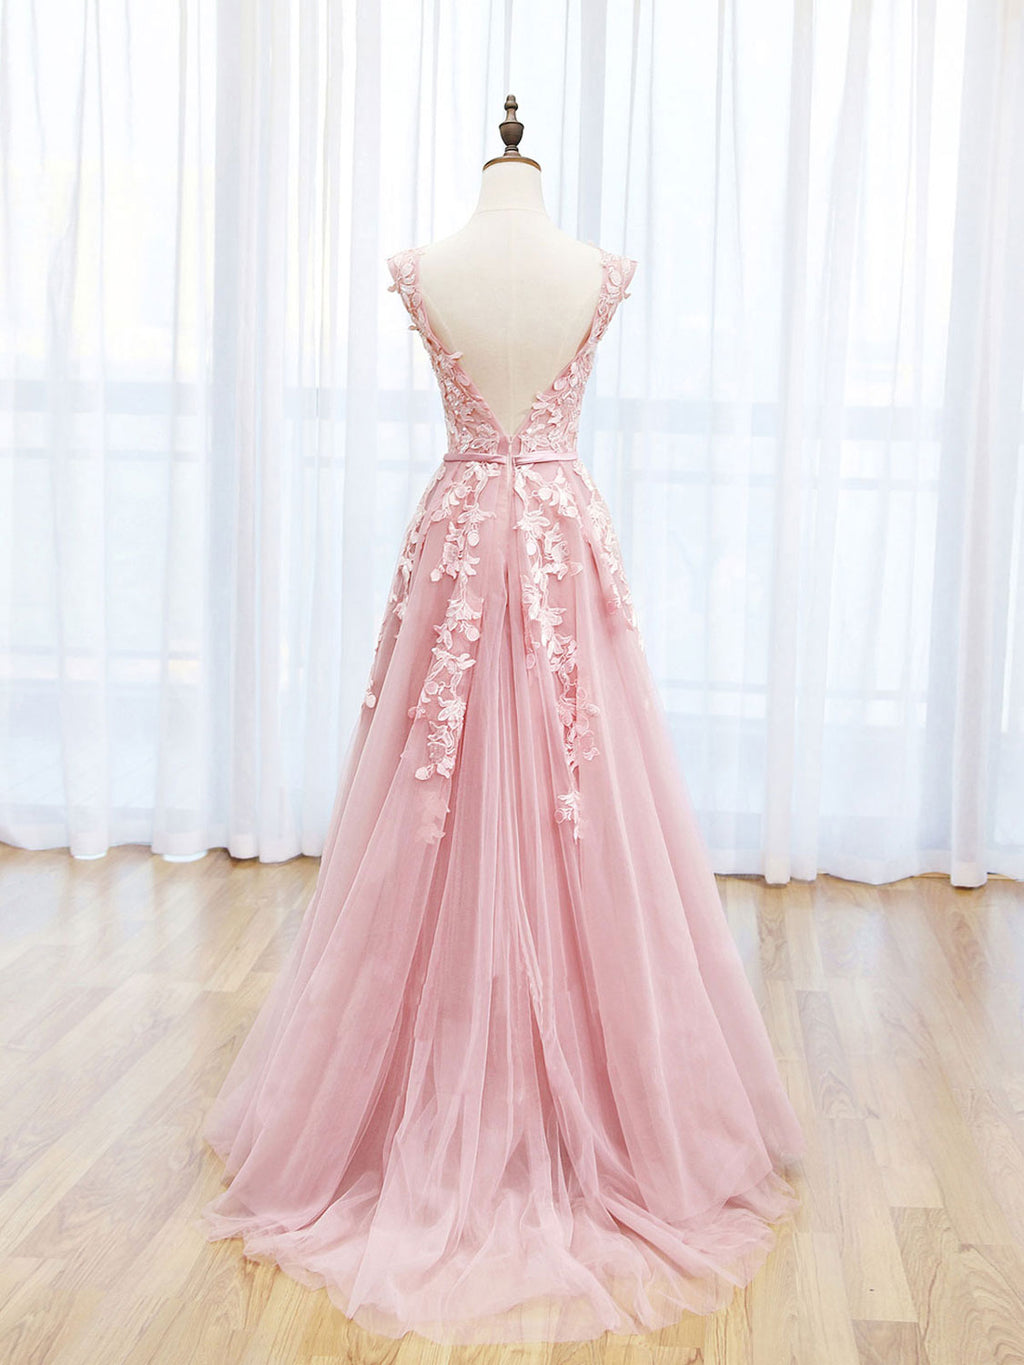 Scoop Neckline Tulle Pink Long Prom Dress, Pink Backless Evening Dresses